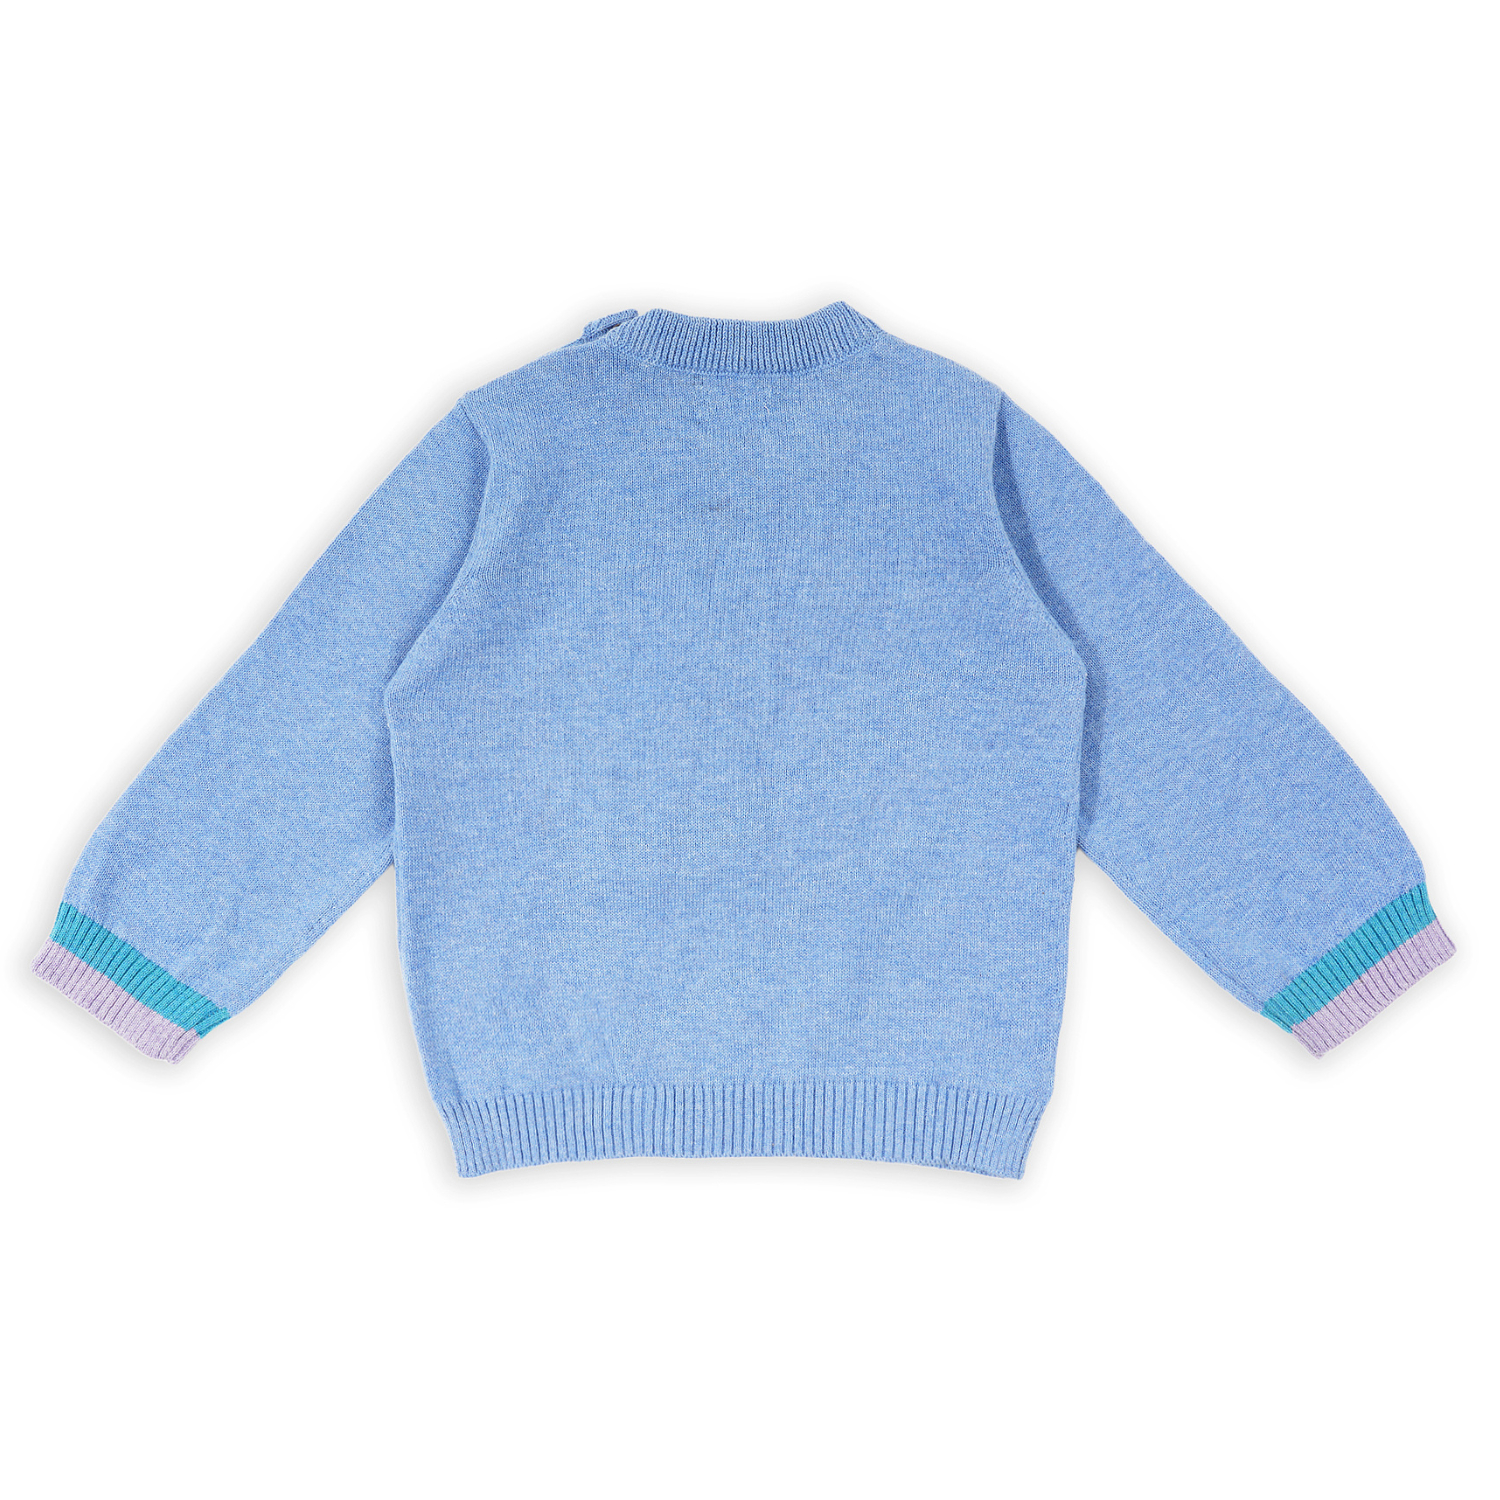 Cuddly Bear Blue Sweater